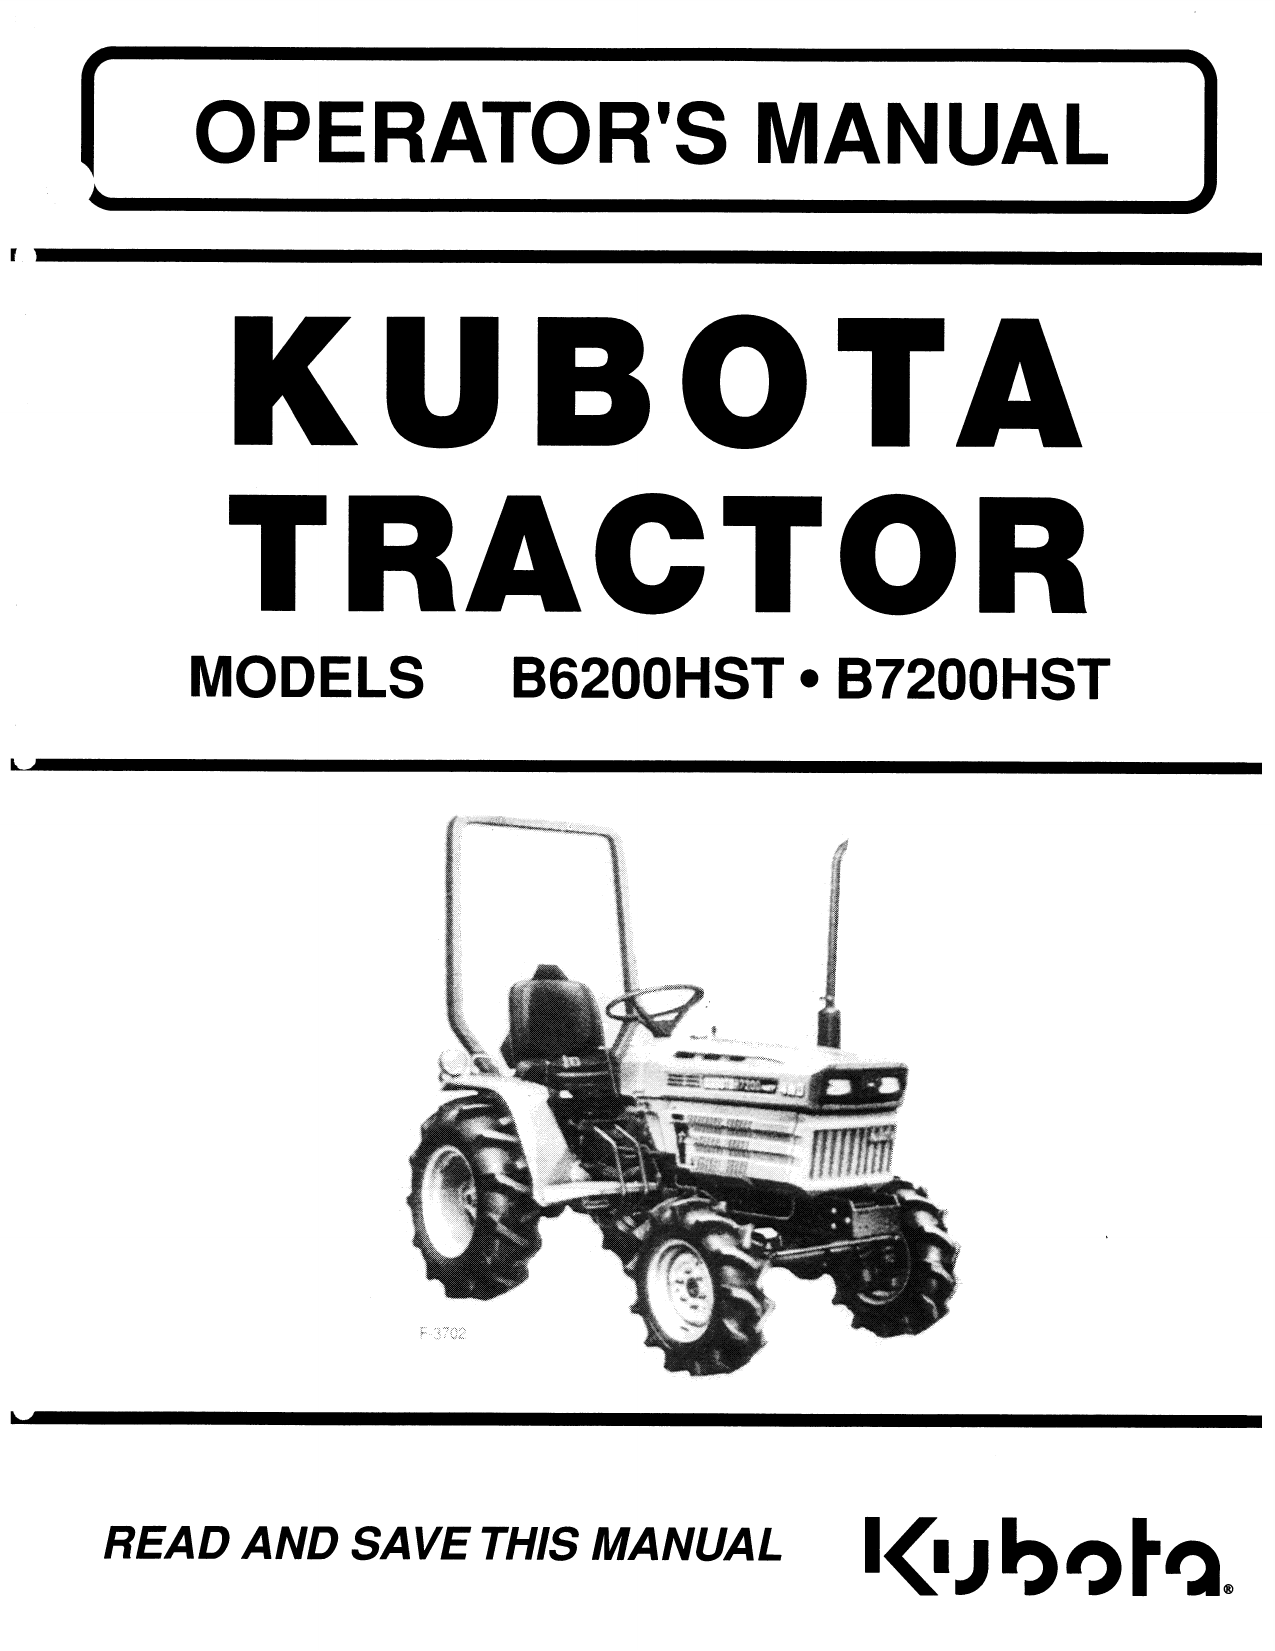 Kubota B6200, B7200HST, B6200HST tractor operators manual Preview image 1